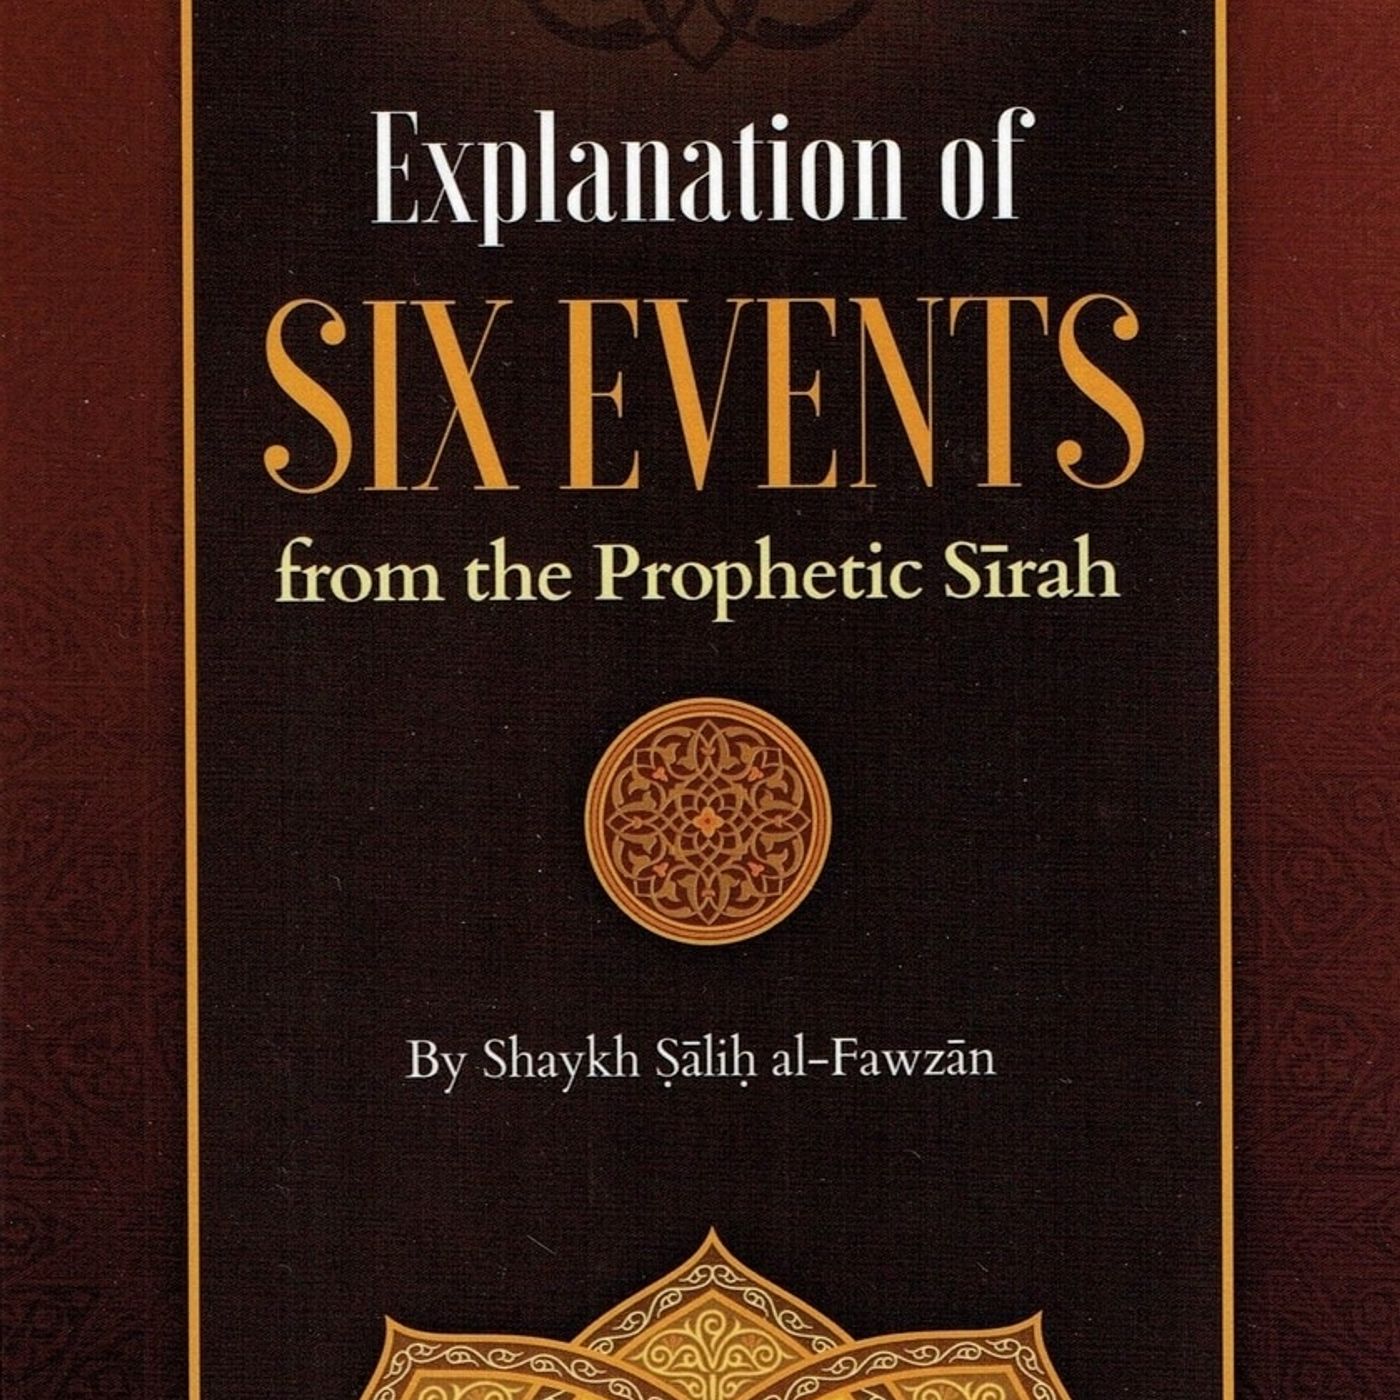 Six Events of the Prophetic Sīrah